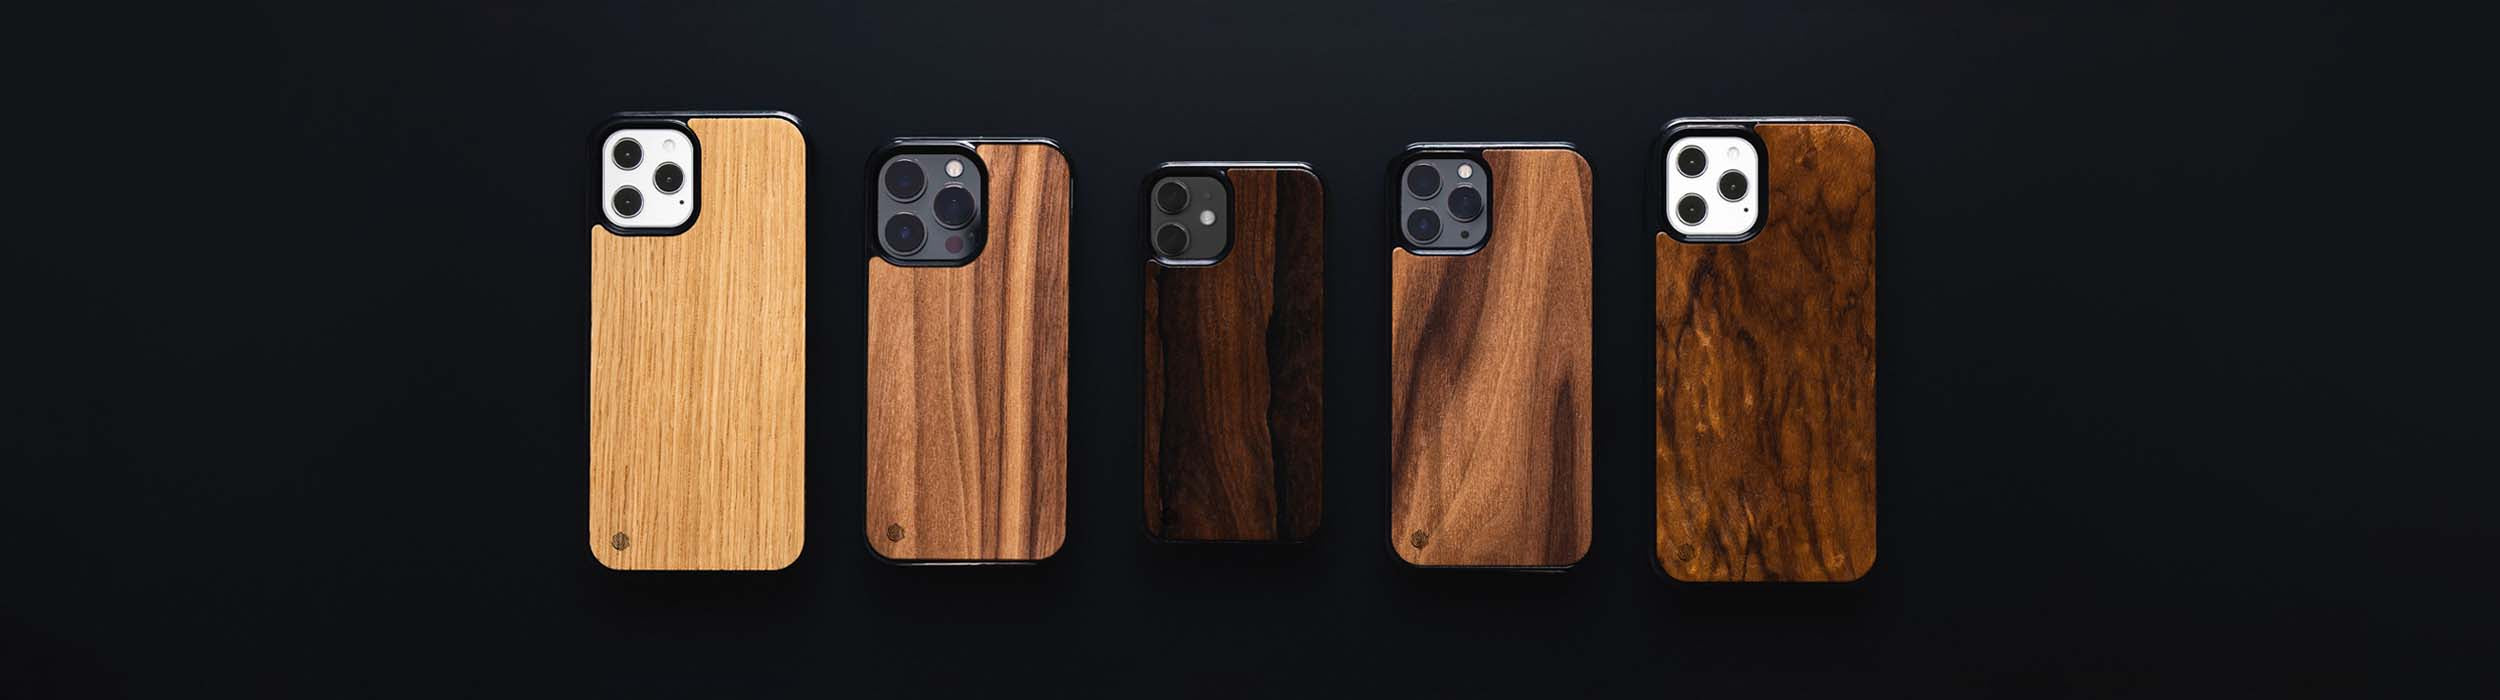 Apple iPhone 11 PRO MAX Handyhüllen aus Holz